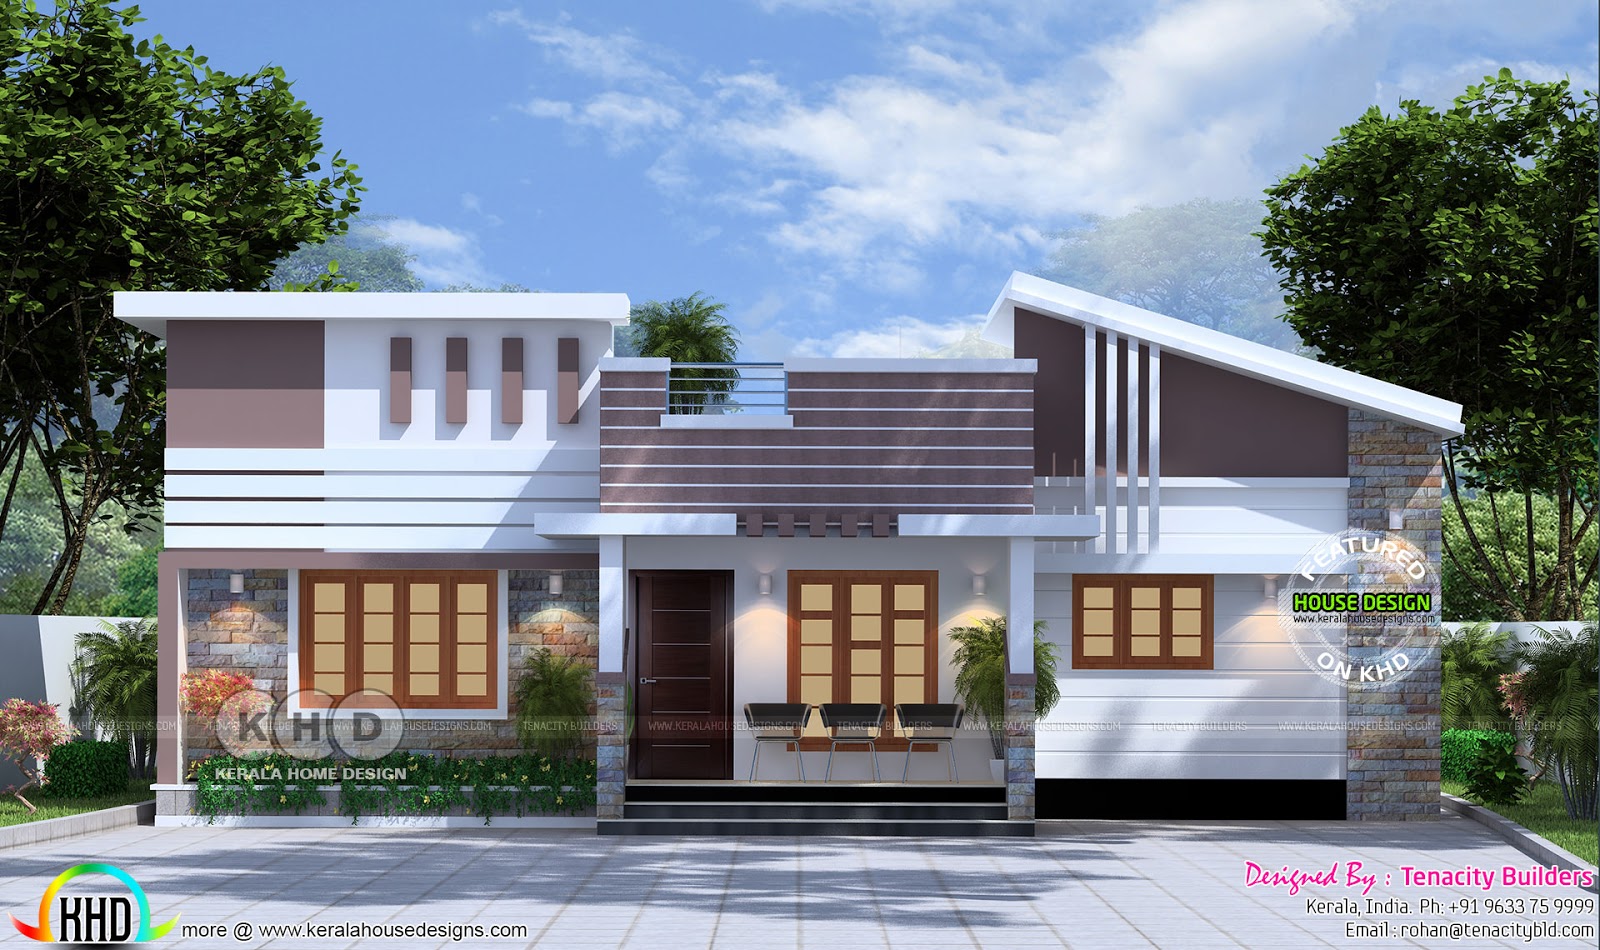  Plan  Elevation  of upcoming home  in Kerala  Kerala  home  